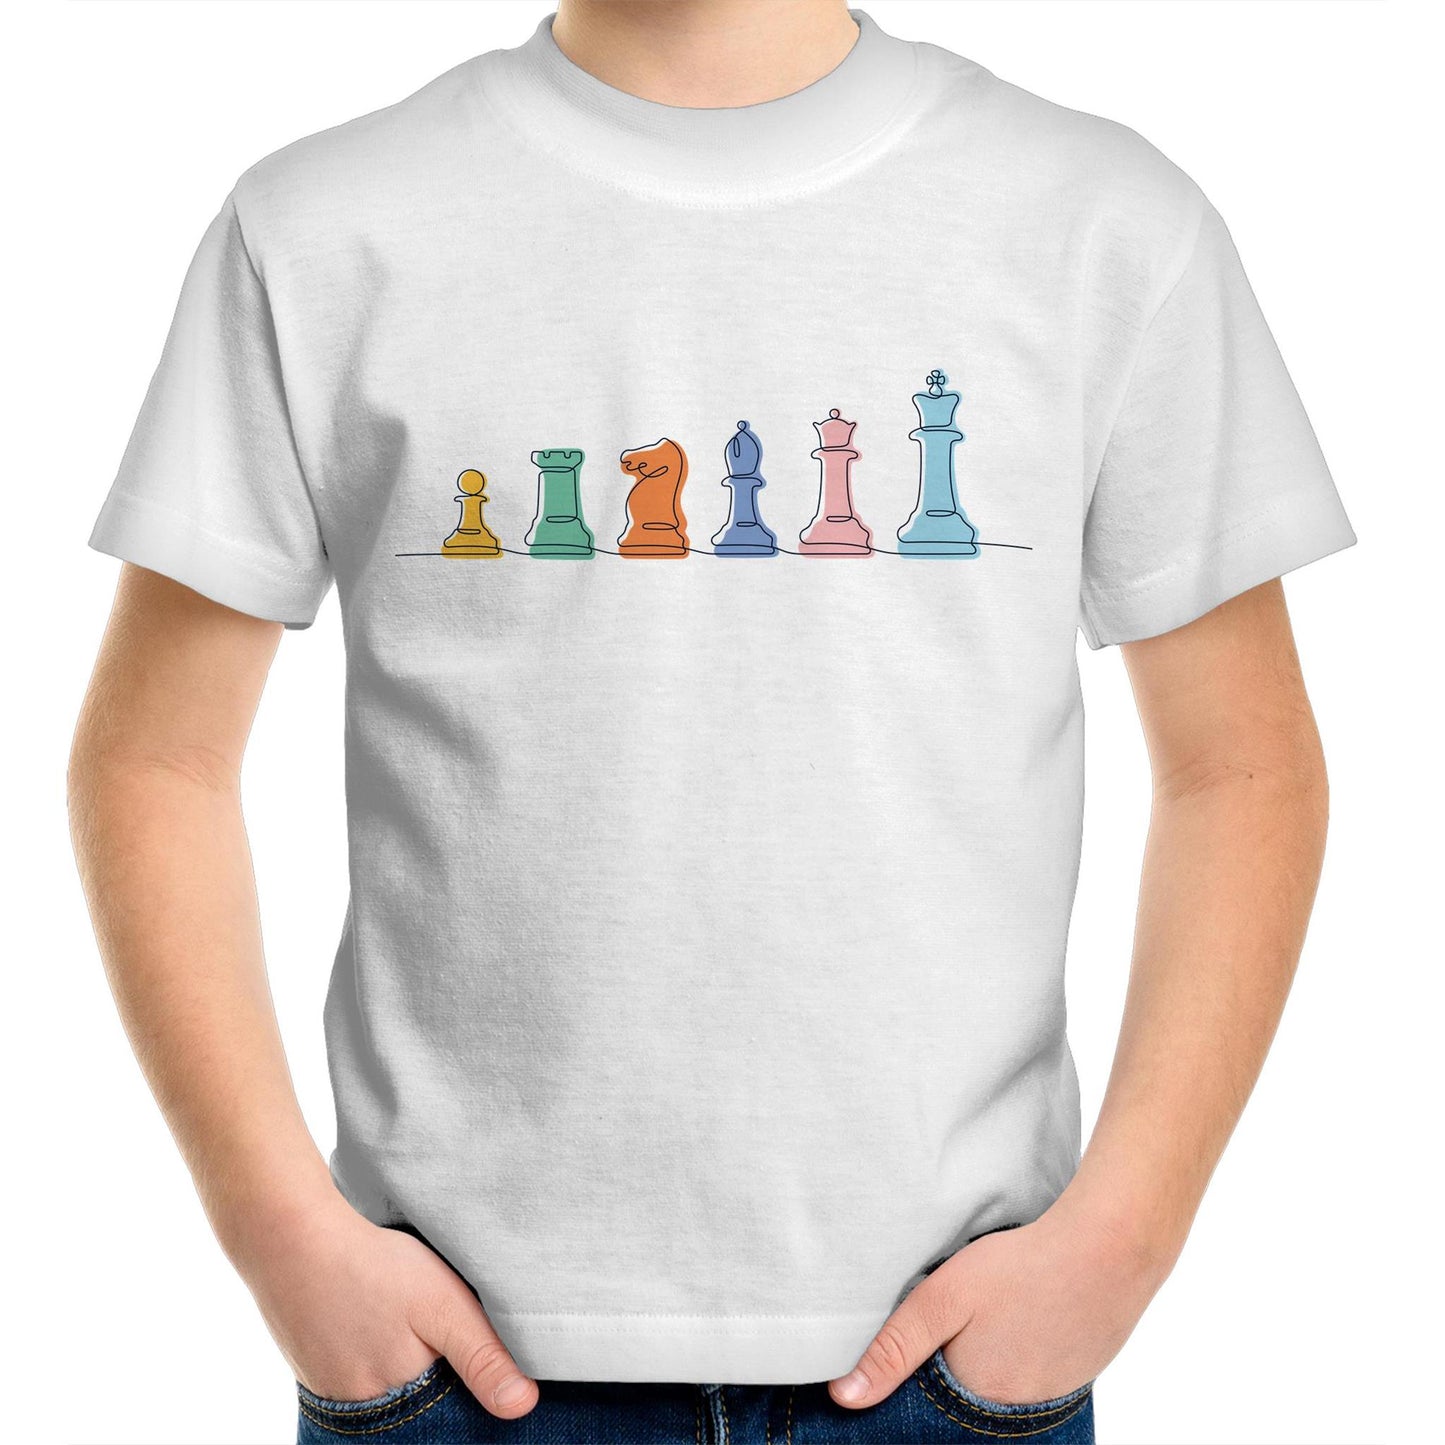 Chess - Kids Youth T-Shirt White Kids Youth T-shirt Chess Games